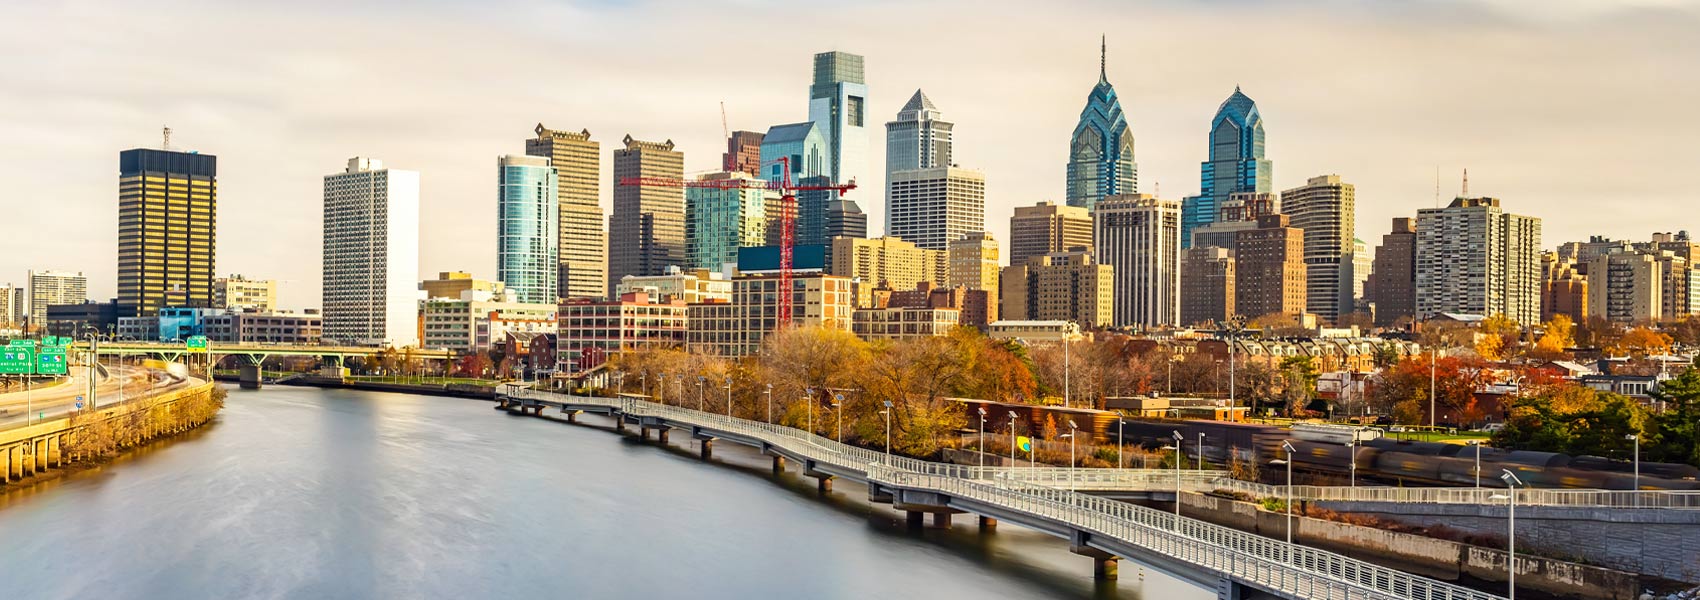 Midday Philadelphia skyline